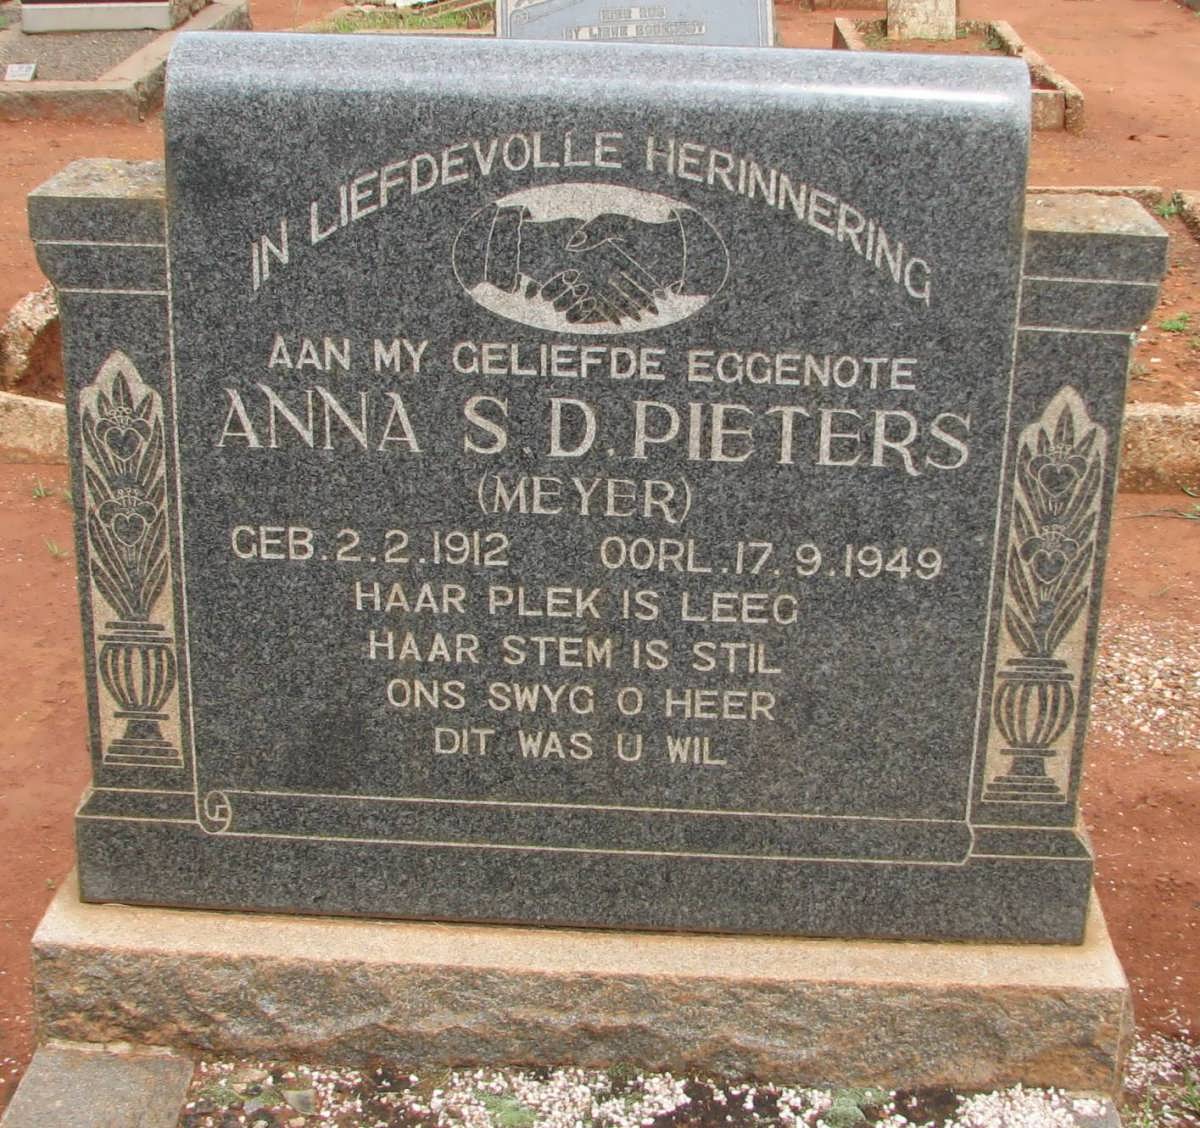 PIETERS Anna S.D. nee MEYER 1912-1949